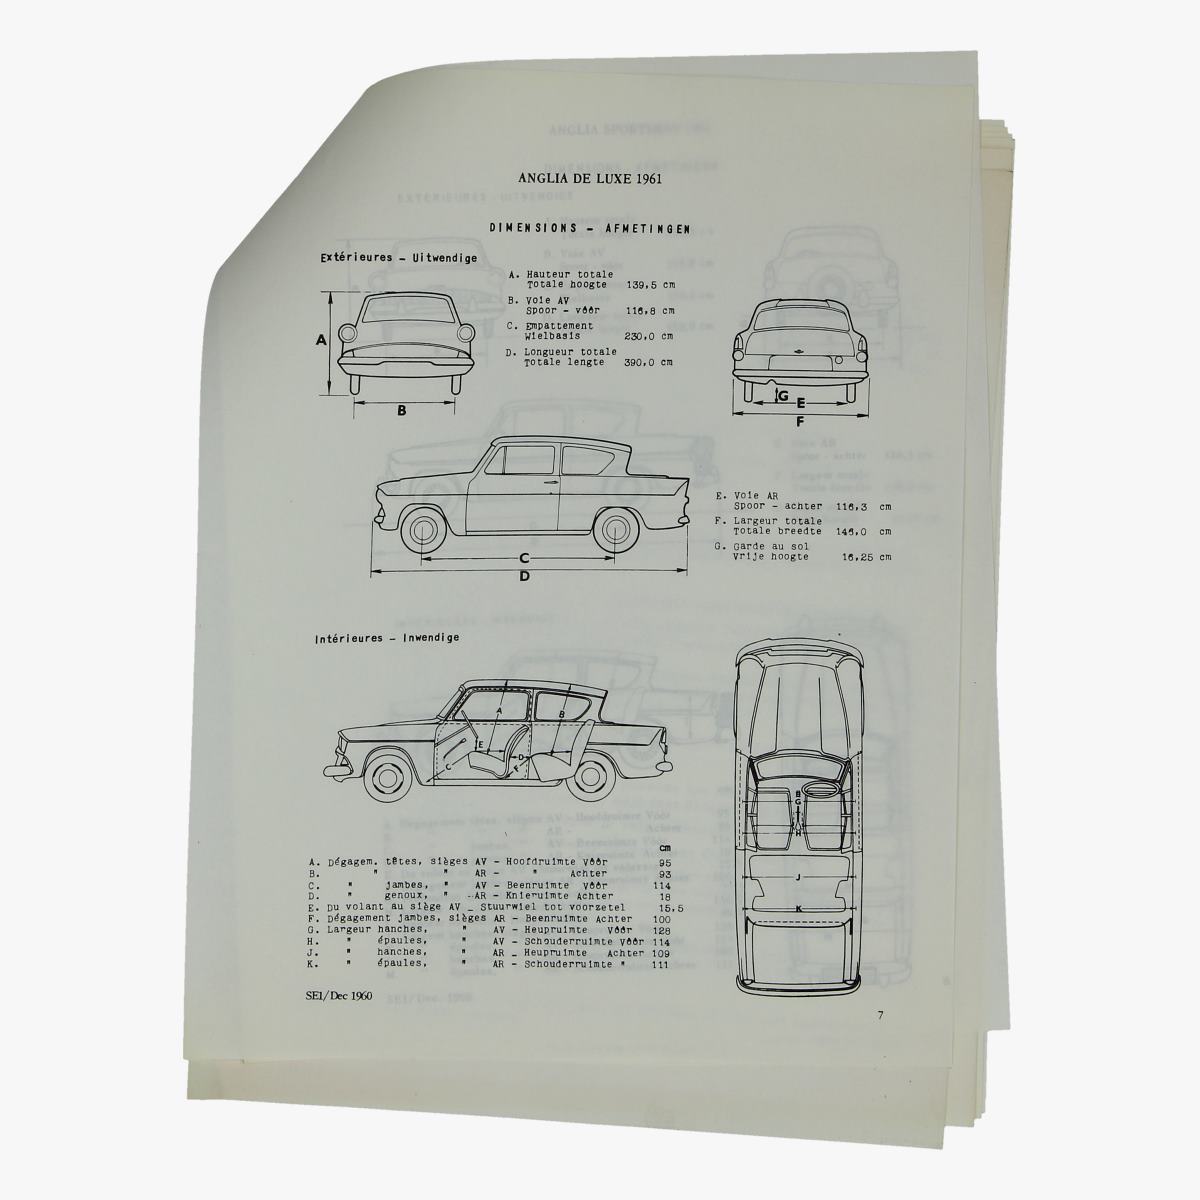 Afbeeldingen van oude folder l'anglia sportman 1961 ford motor company